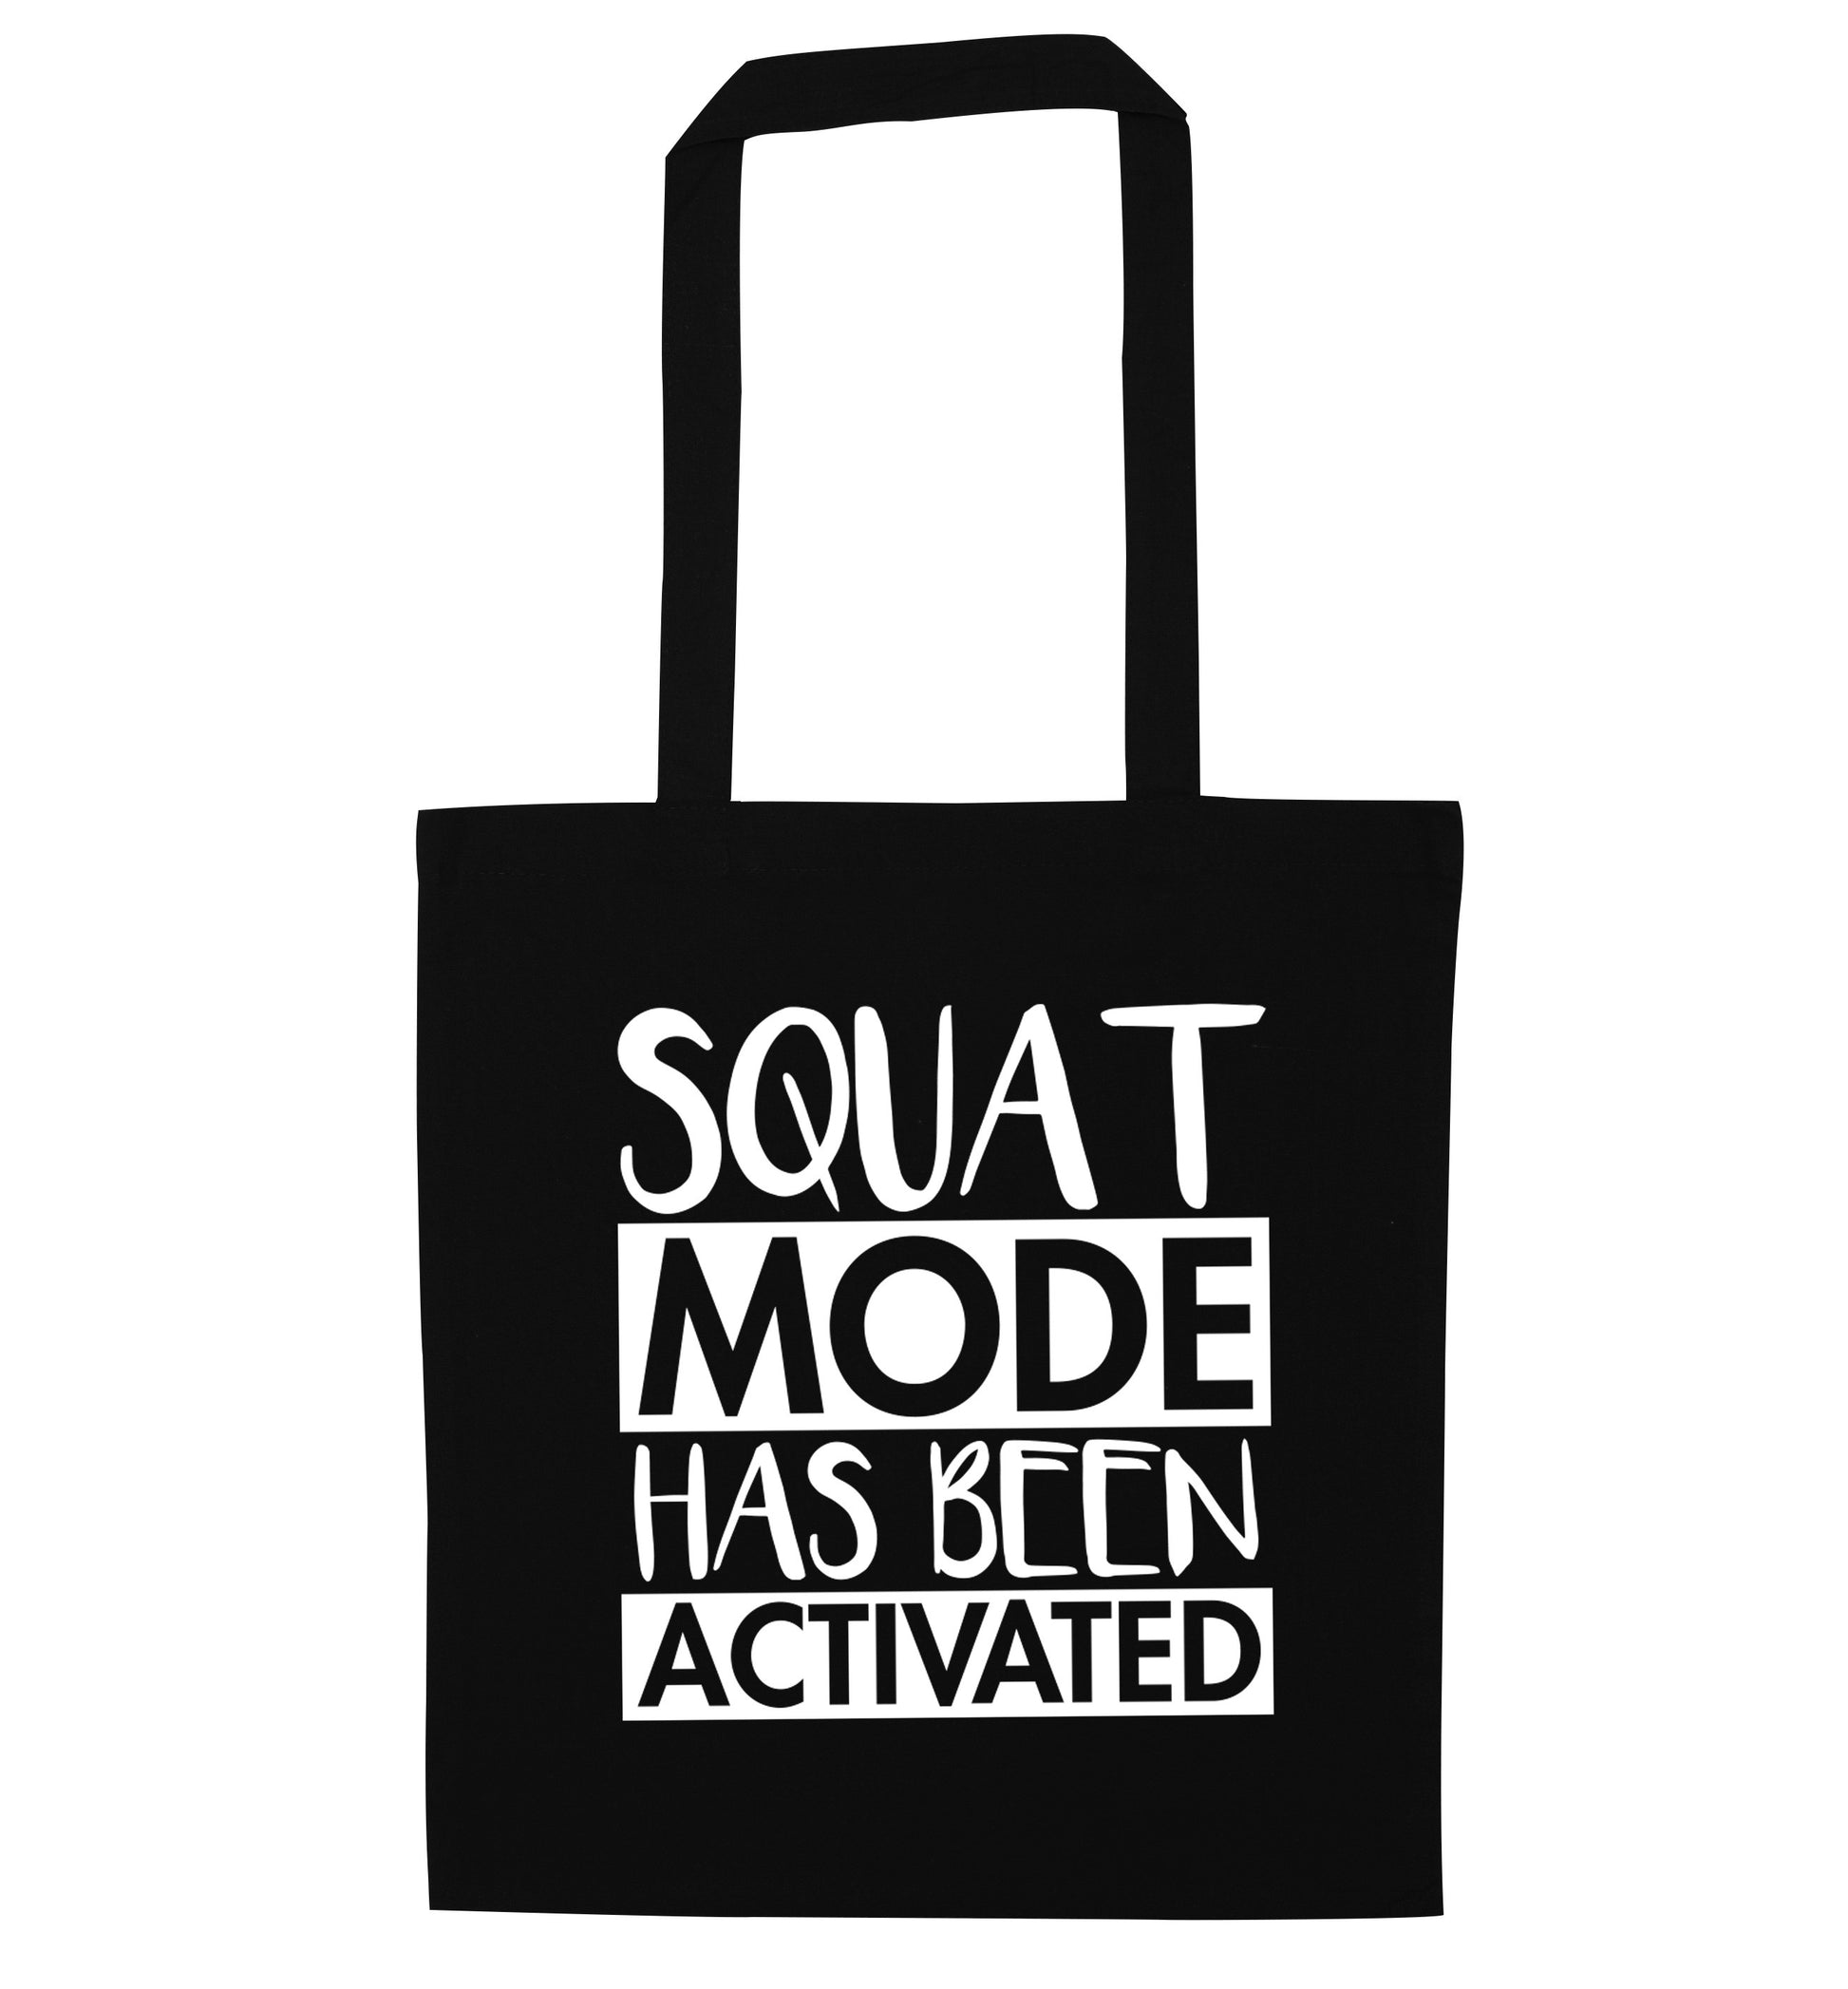 Squat mode activated black tote bag